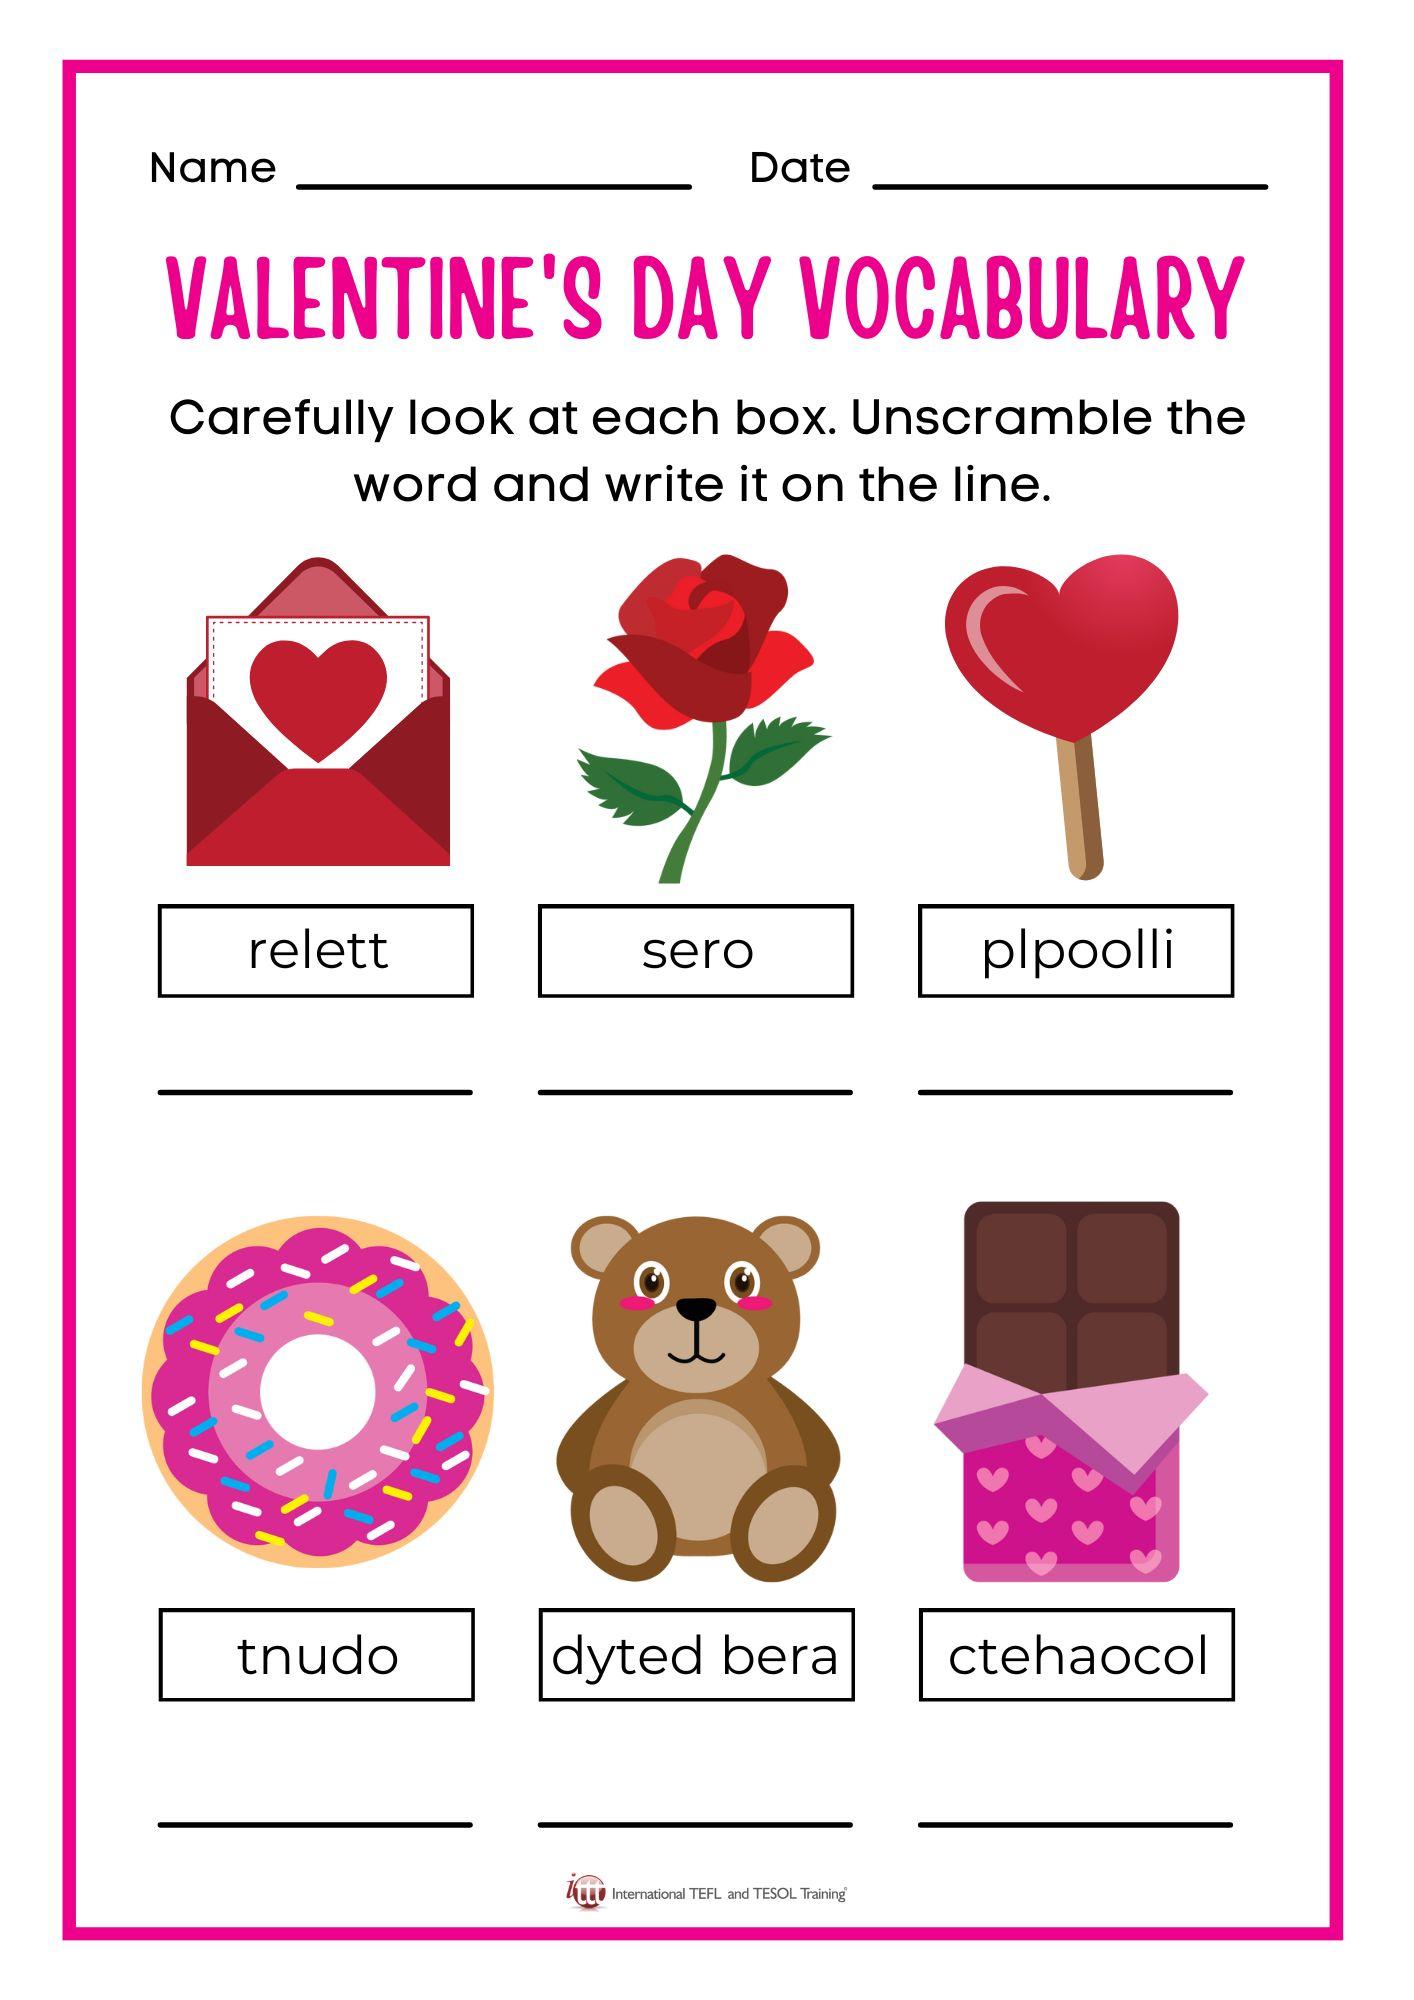 Grammar corner Valentine's Day Vocabulary EFL Worksheet